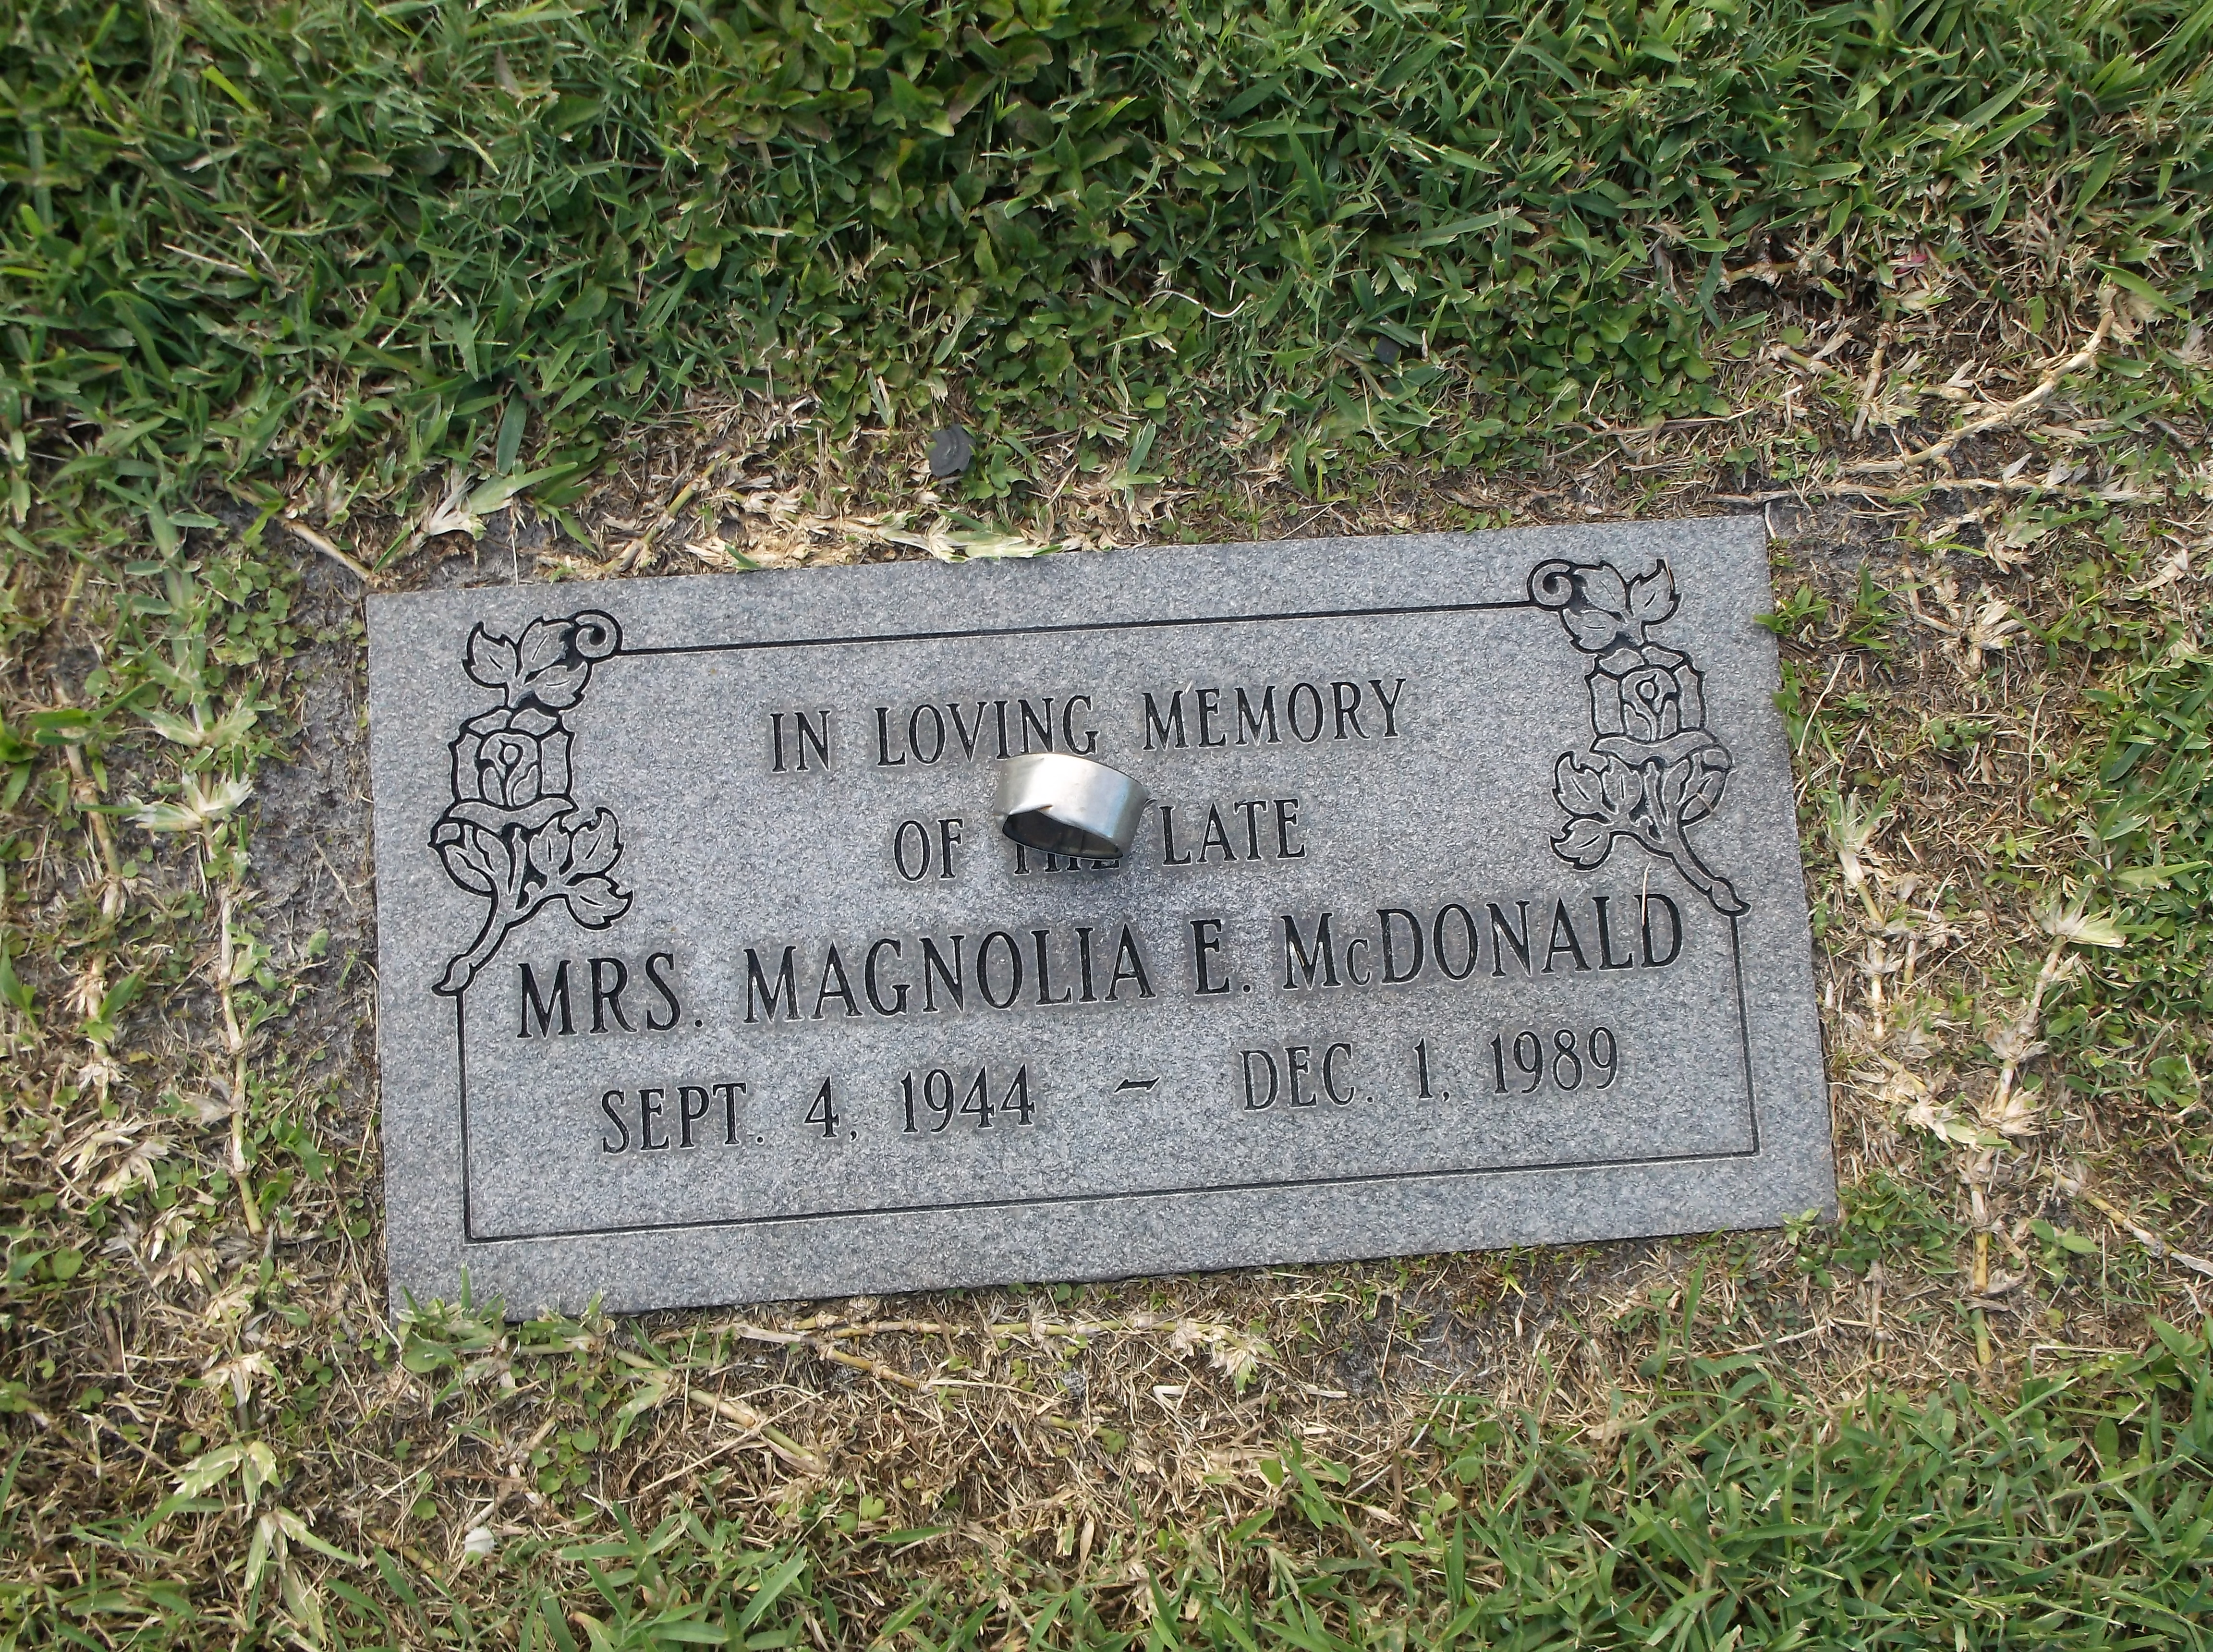 Magnolia E McDonald